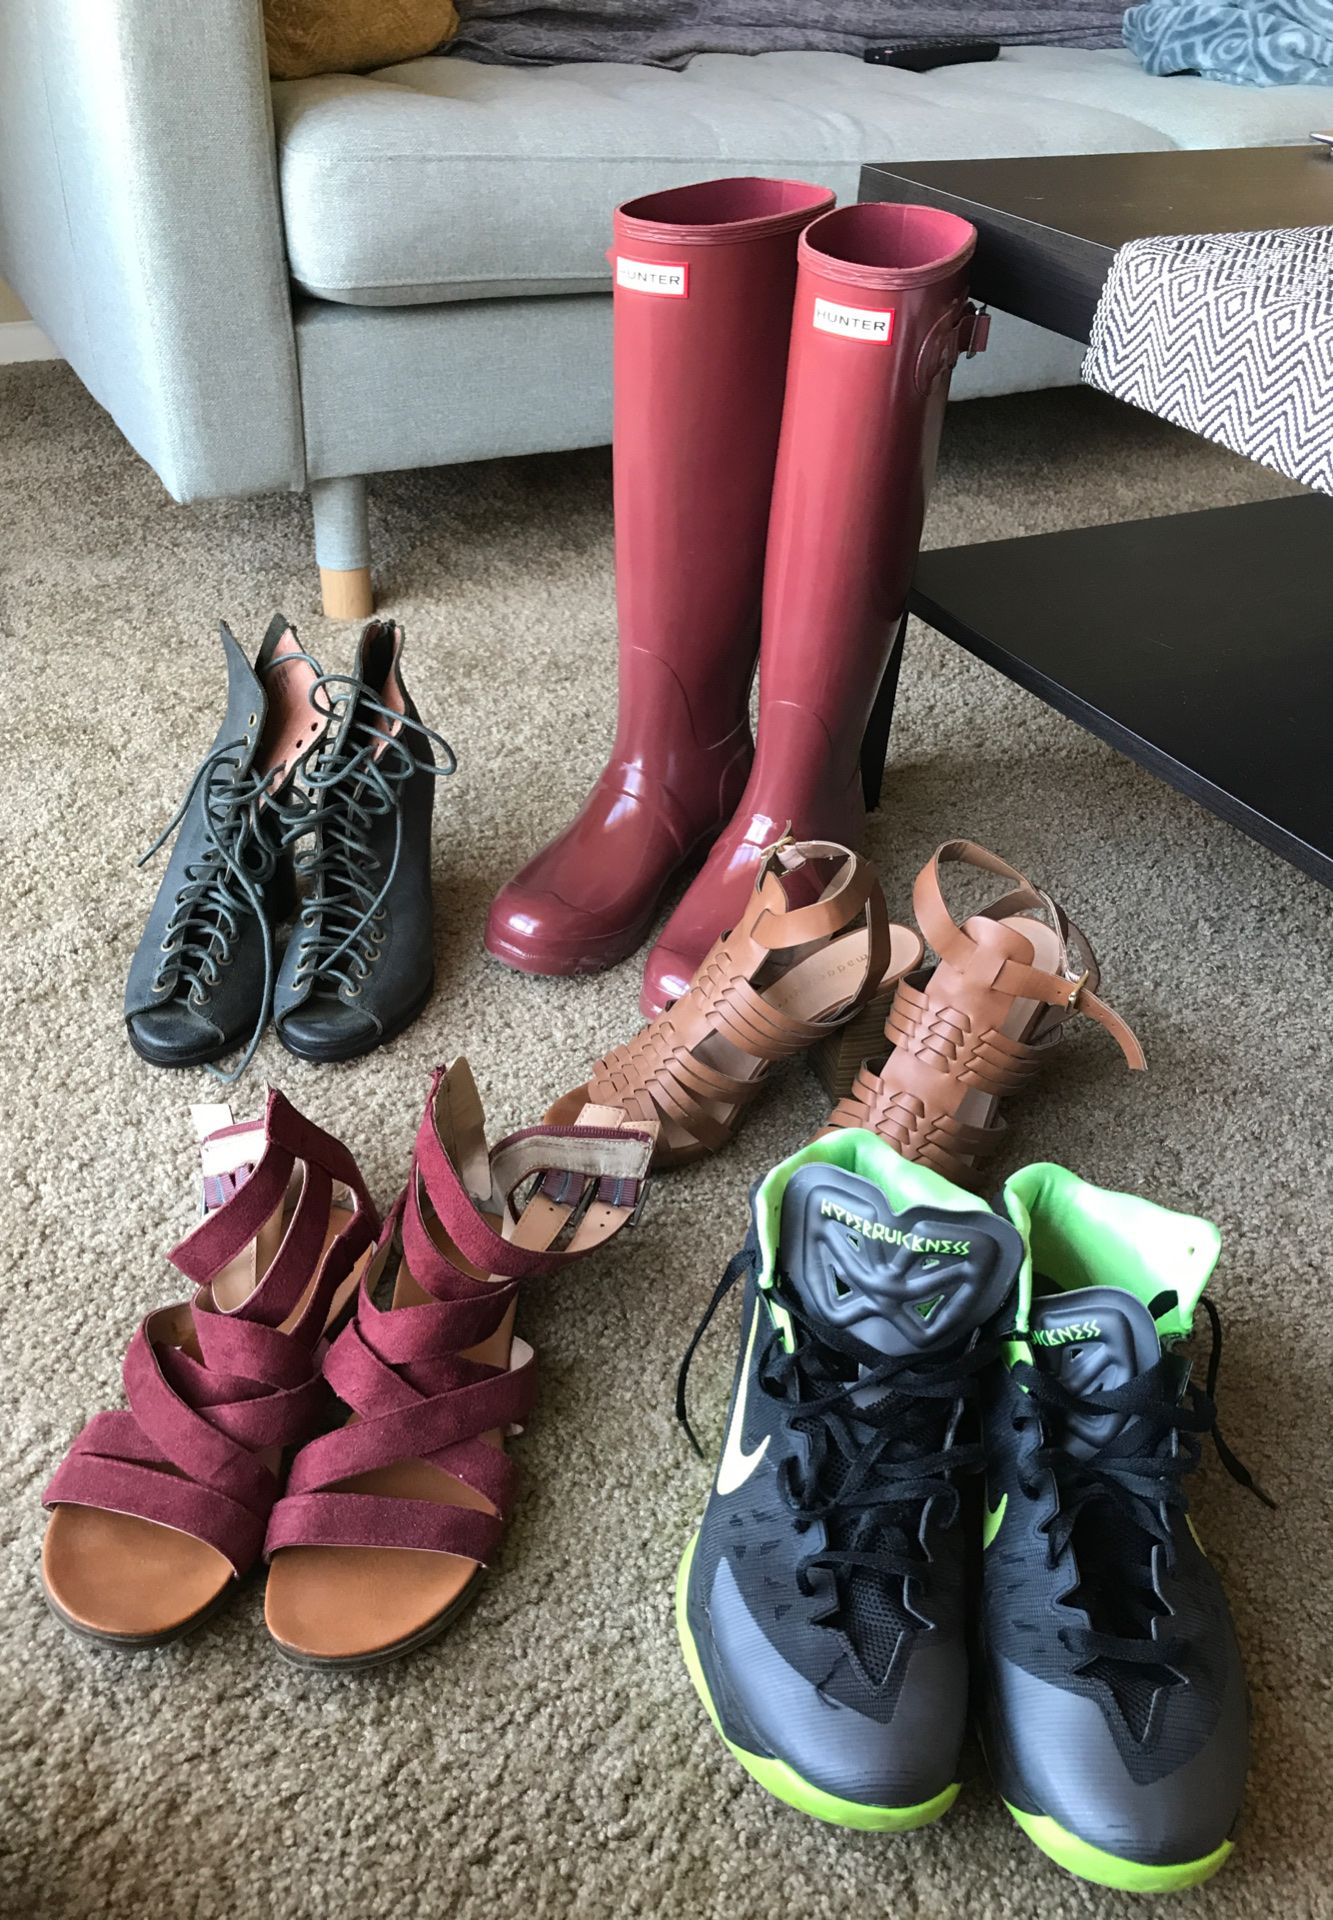 Shoes! Women’s Hunter Tall rain boots 8, men’s Nike basketball 10.5